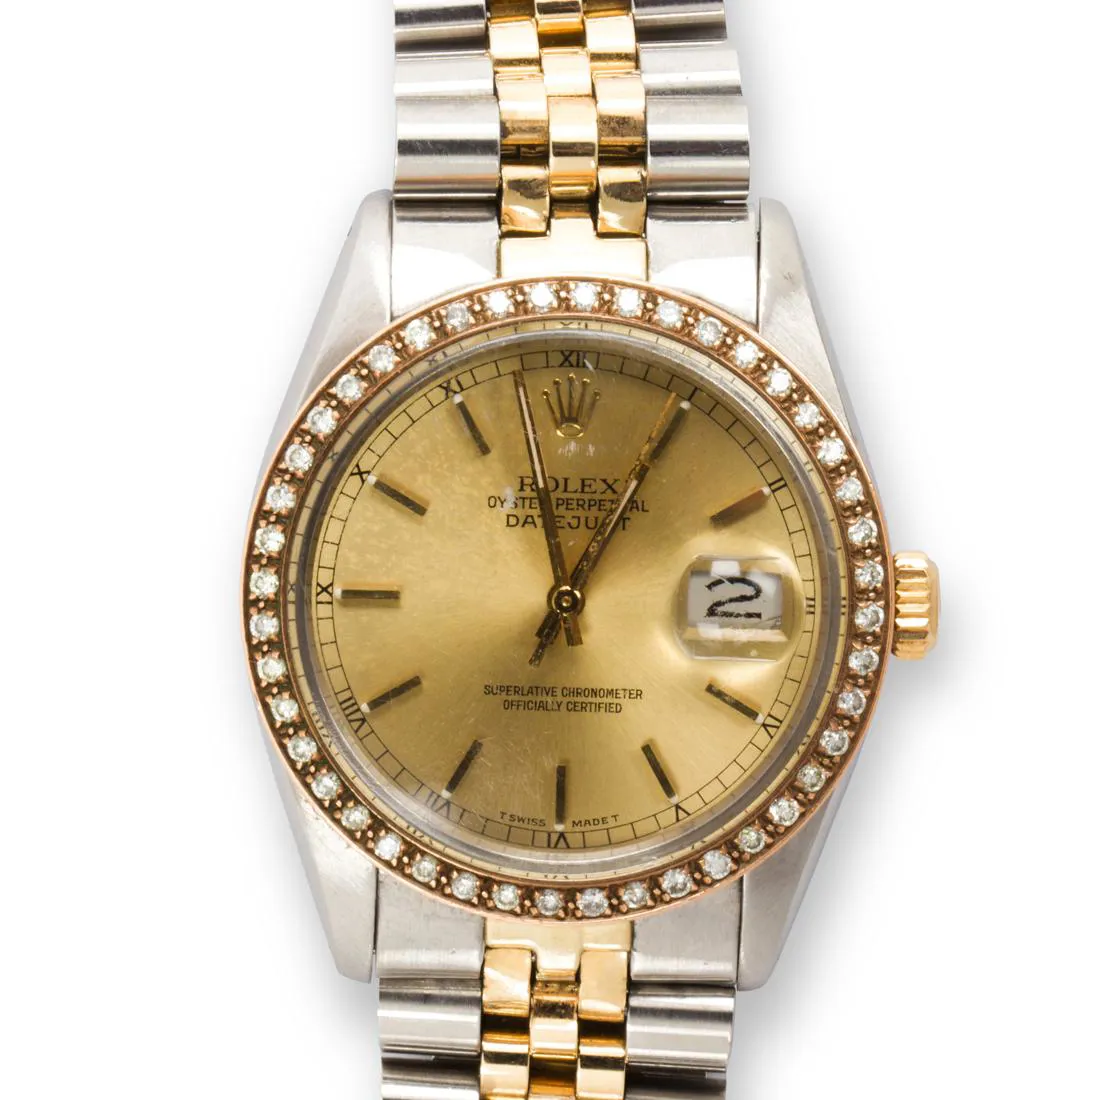 Rolex Datejust 36 16013 36mm Yellow gold Gilt dial